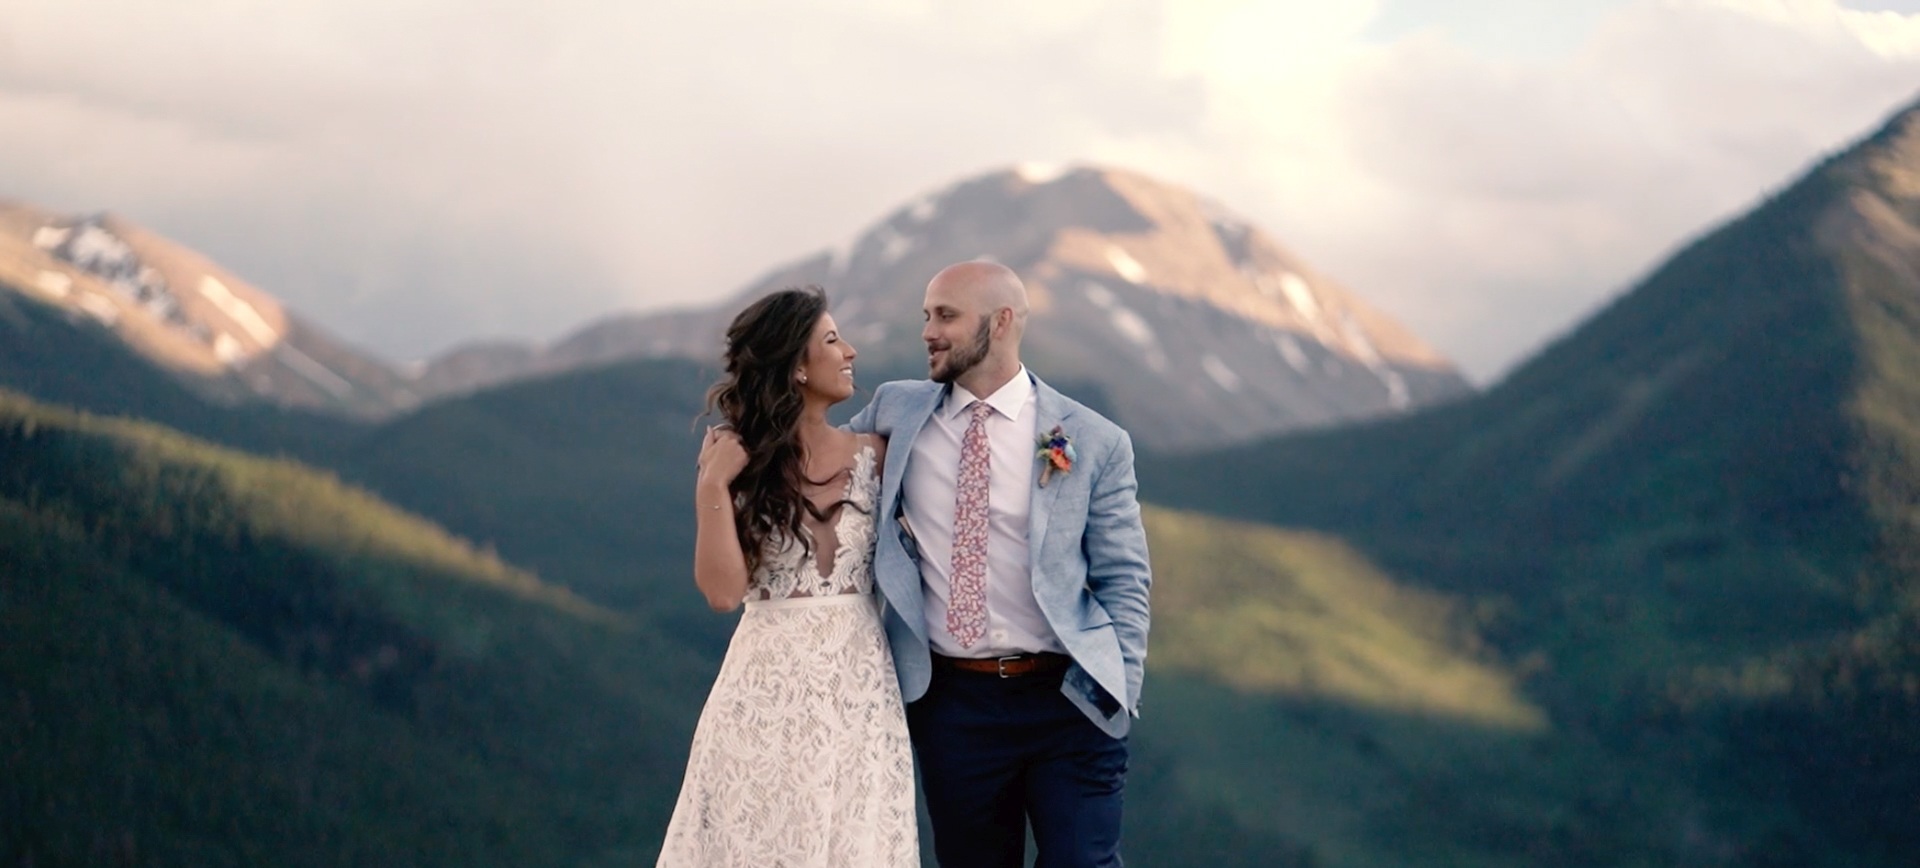 Colorado Elopement - Adventure Wedding in the Rocky Mountains